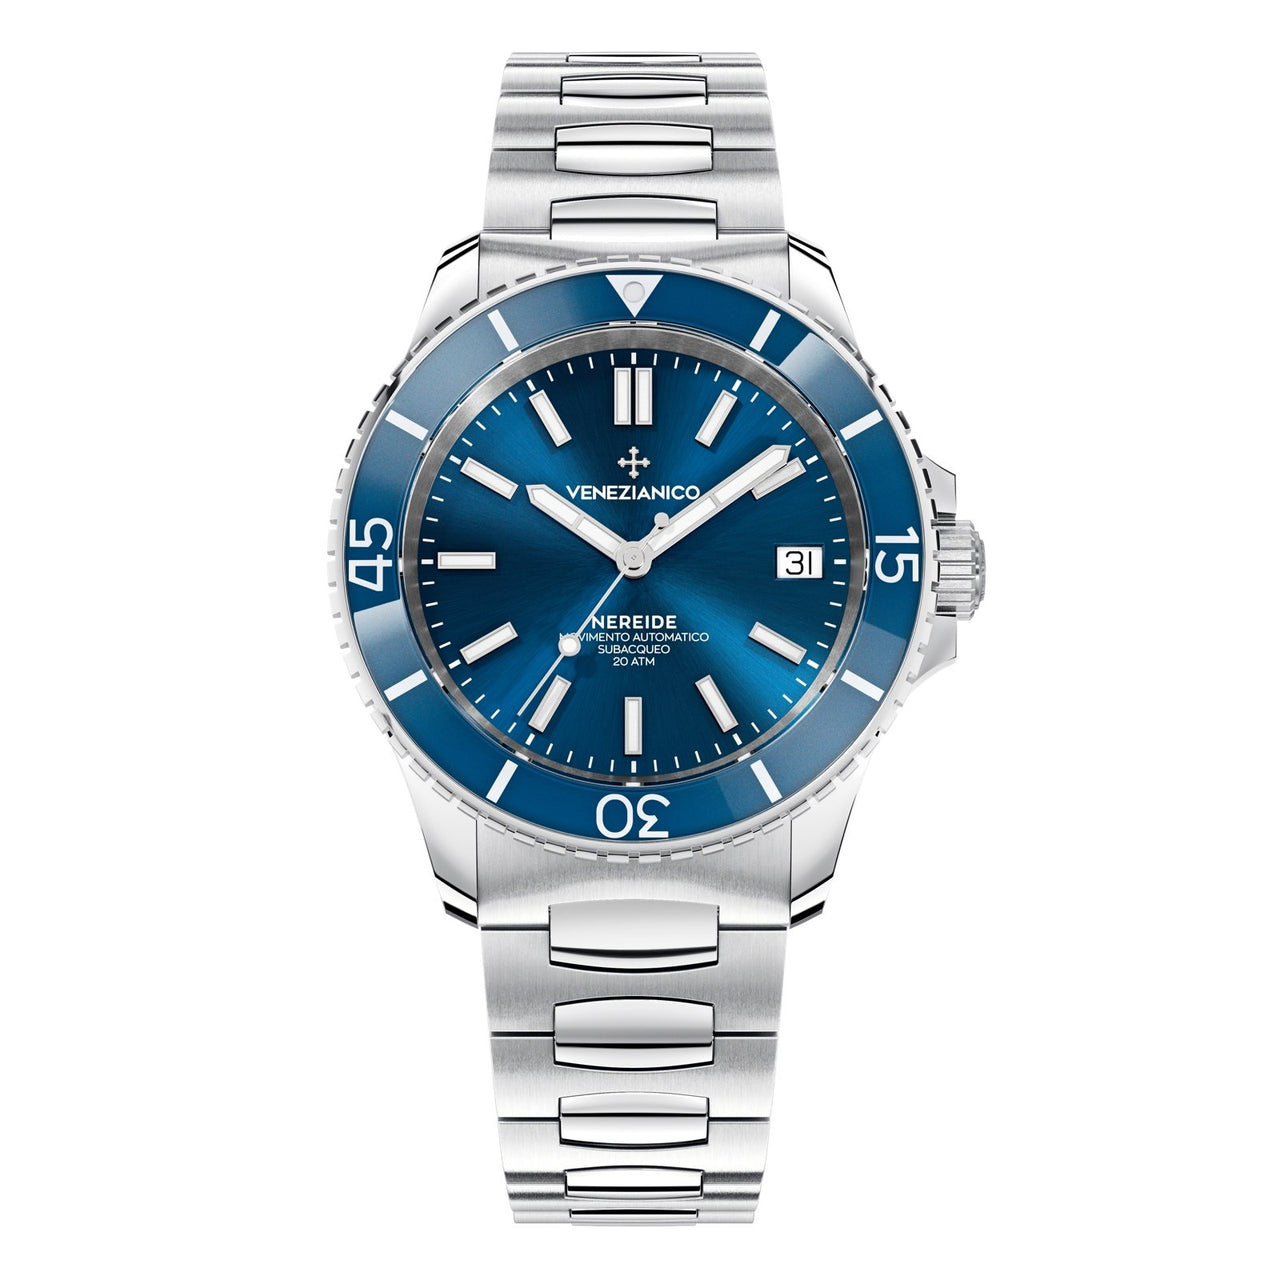 Venezianico Automatic Watch Nereide 39 Canova Bracelet Blue 3121502C - Watches & Crystals